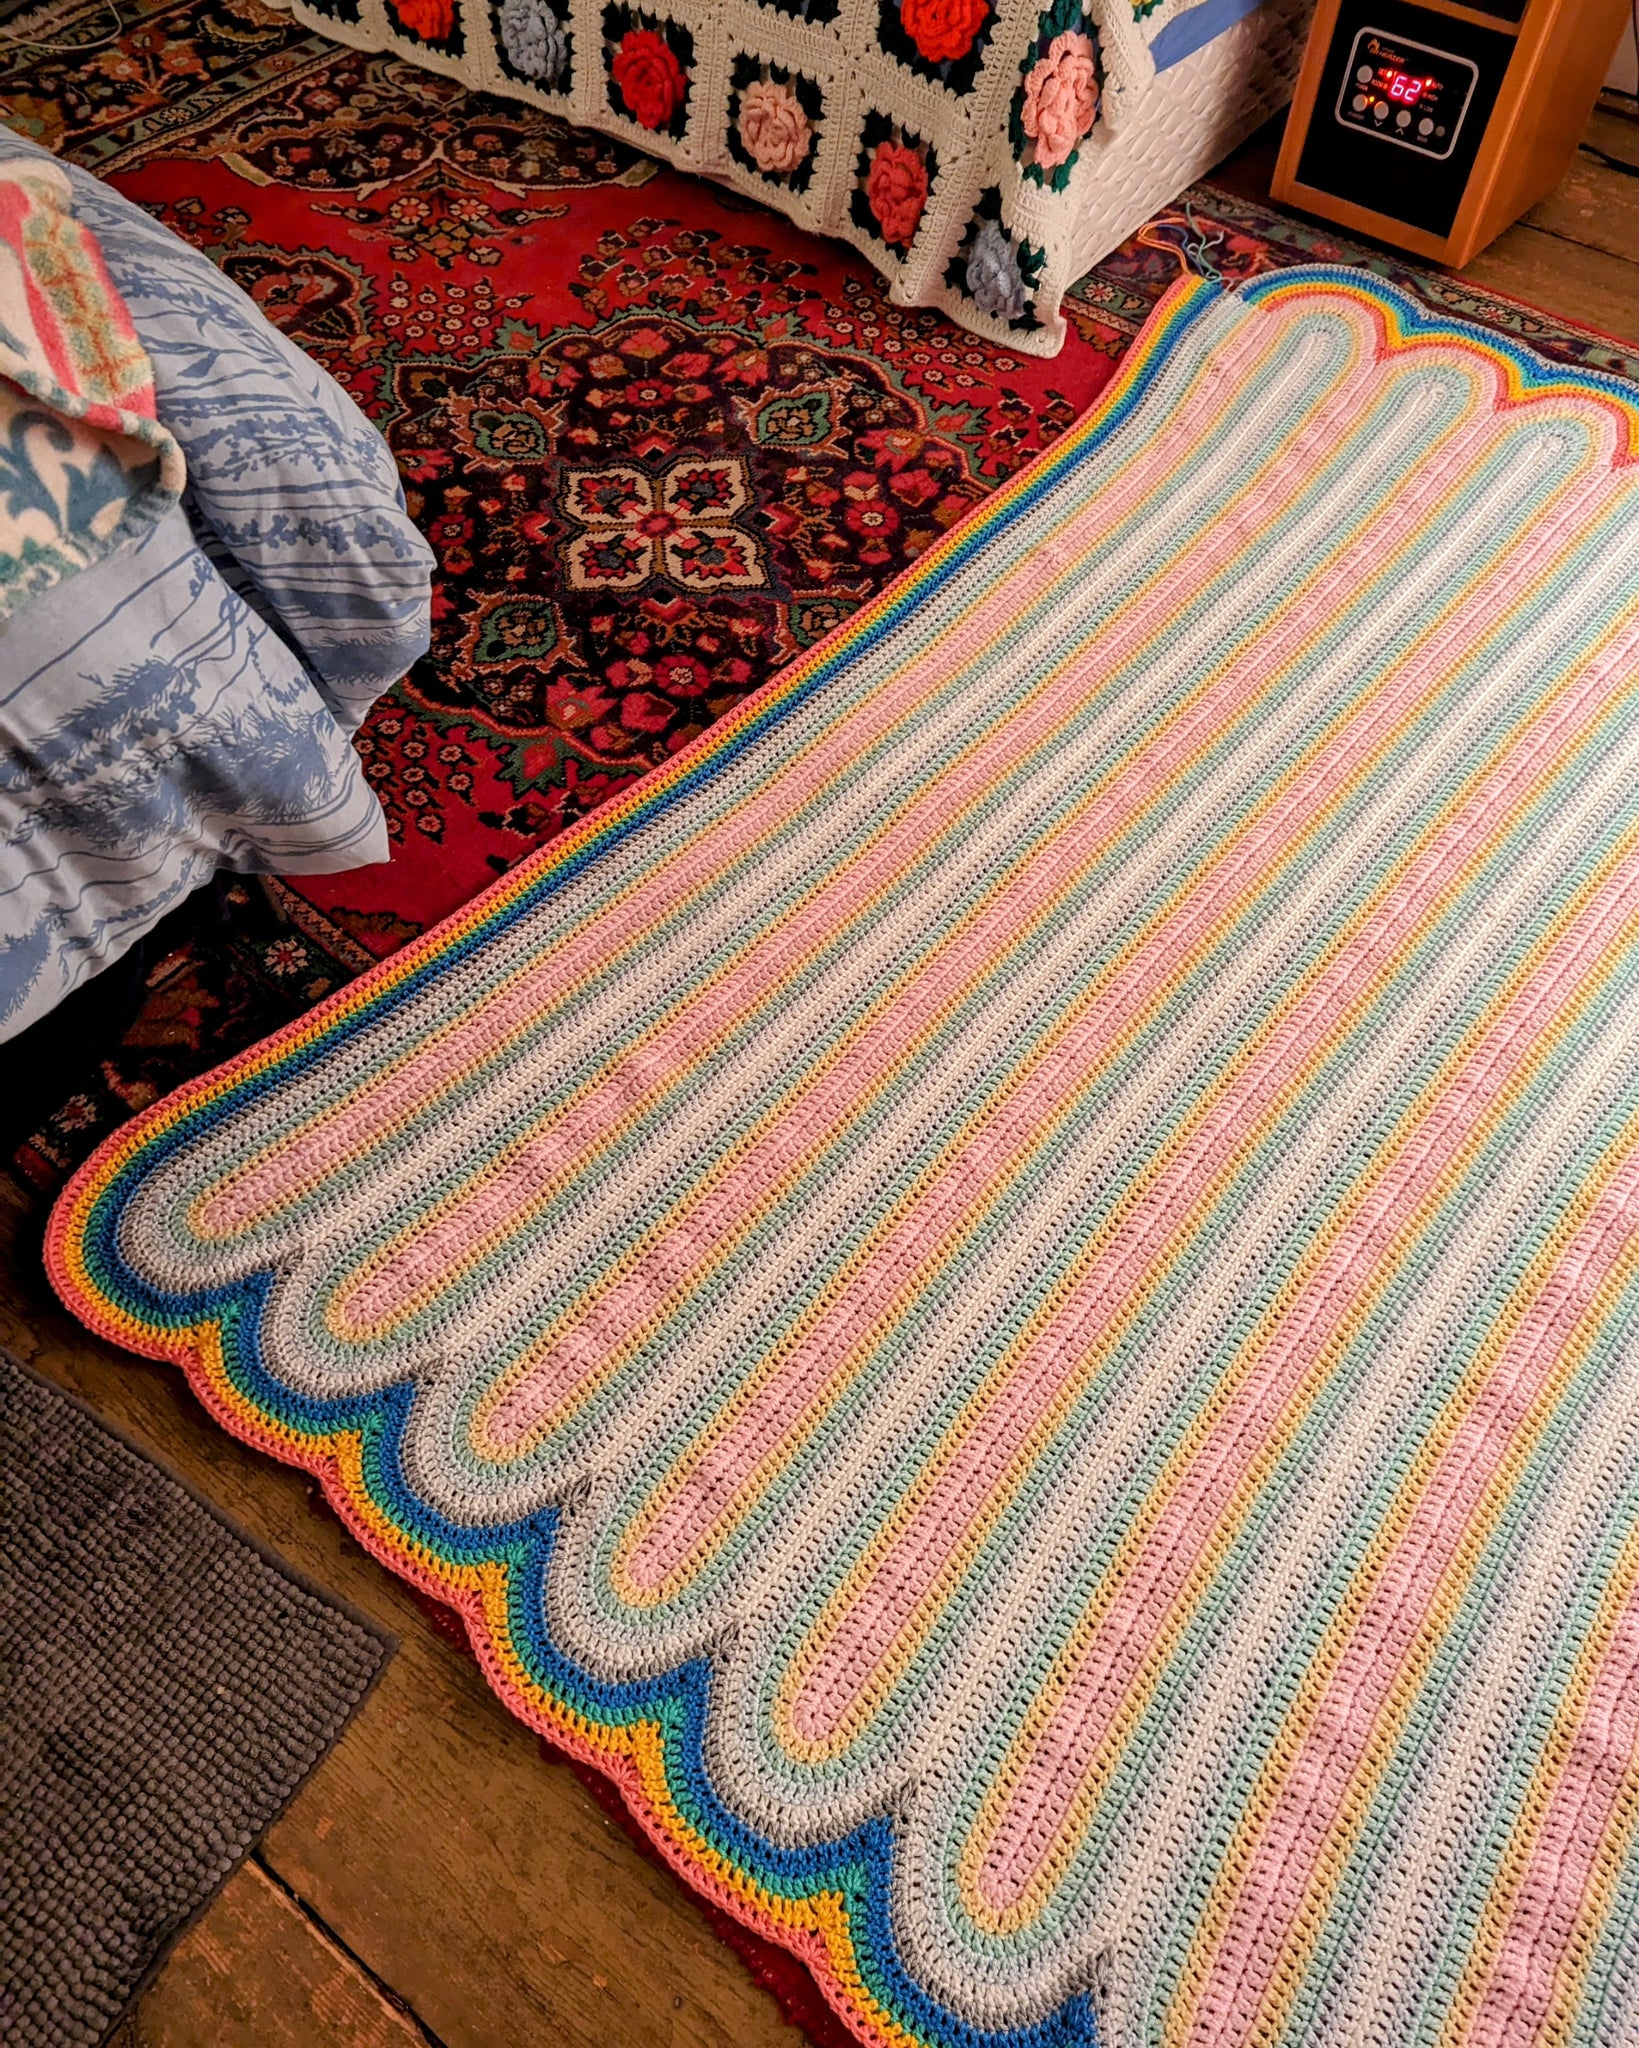 'Rainbow Reflection' Blanket Downloadable Crochet Pattern